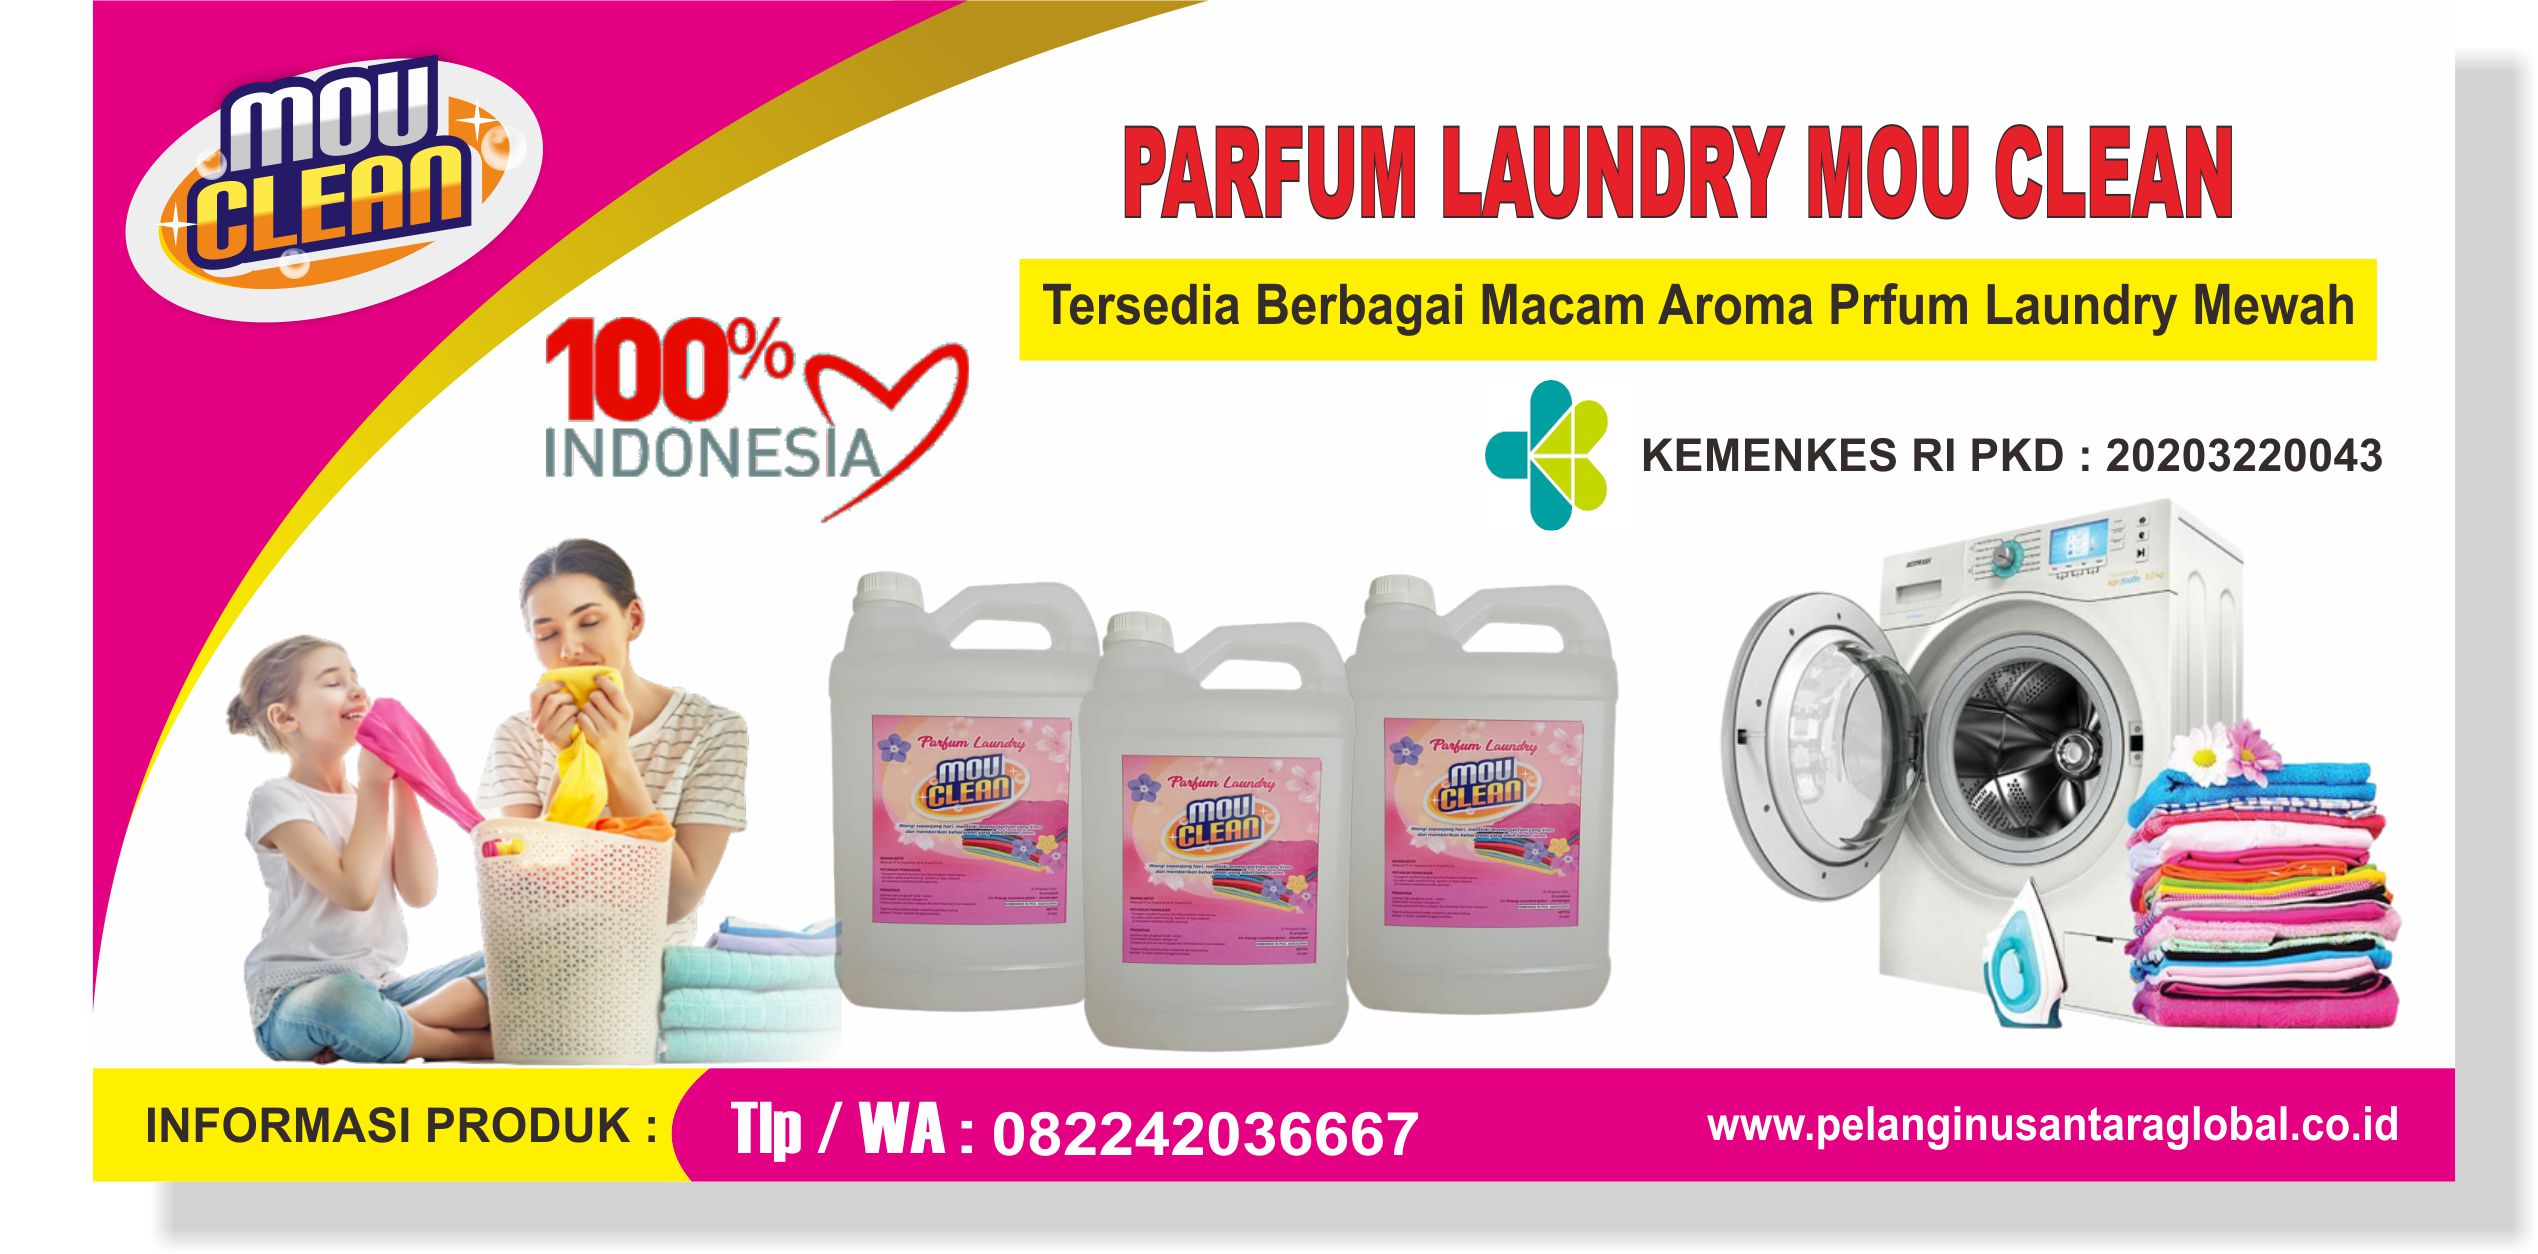 Penyedia Pewangi Pakaian Laundry Berkualitas  Di Kupang